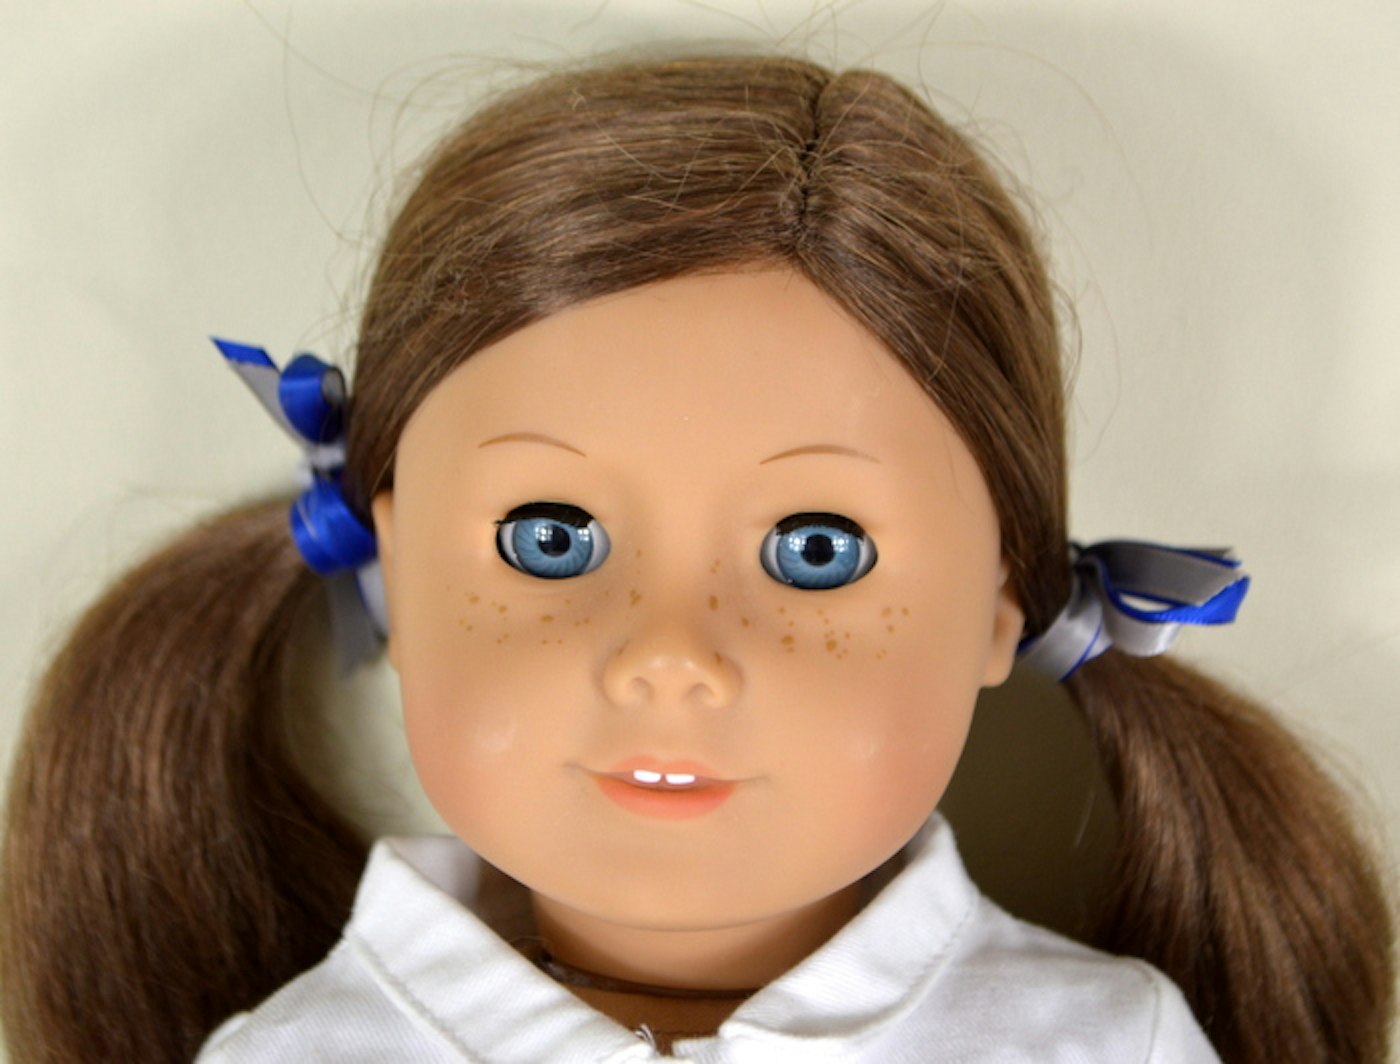 American Girl Doll Sale: The Dolls